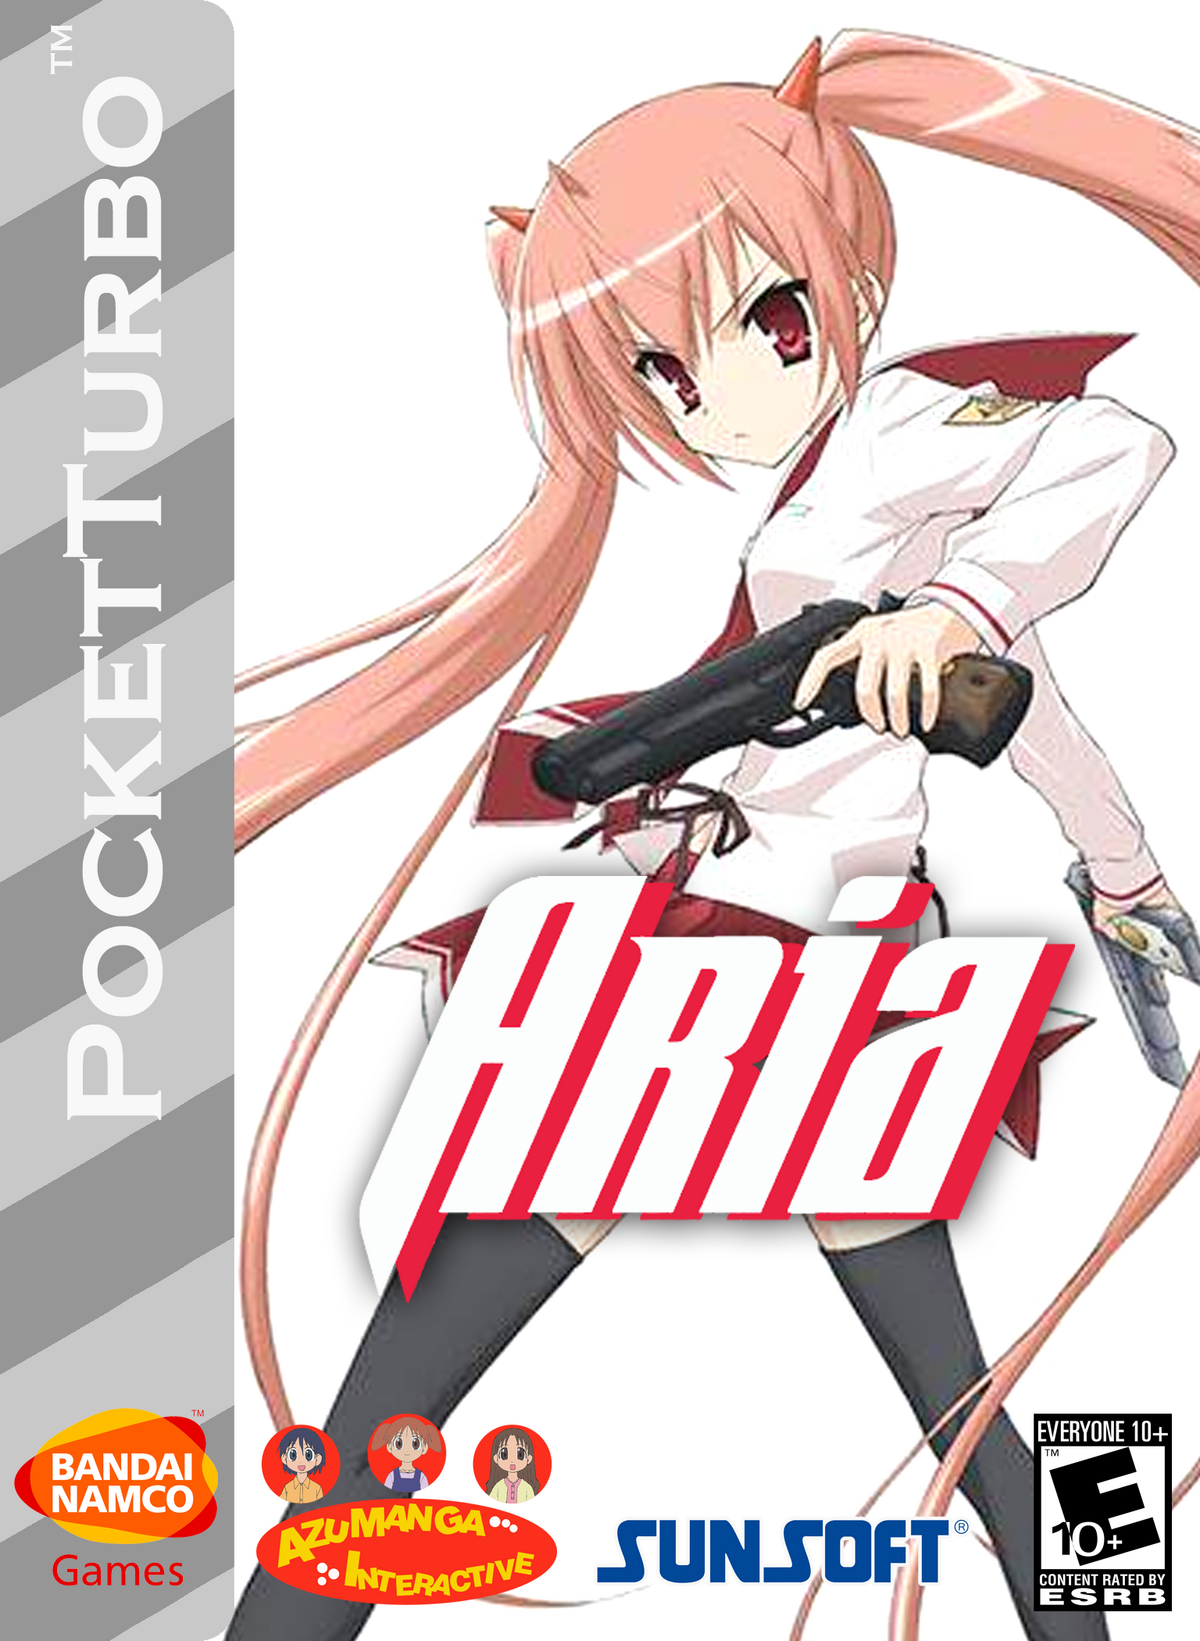 WEBストア限定 Aria: The Scarlet Ammo [Blu-ray] [Import] i8my1cf ...